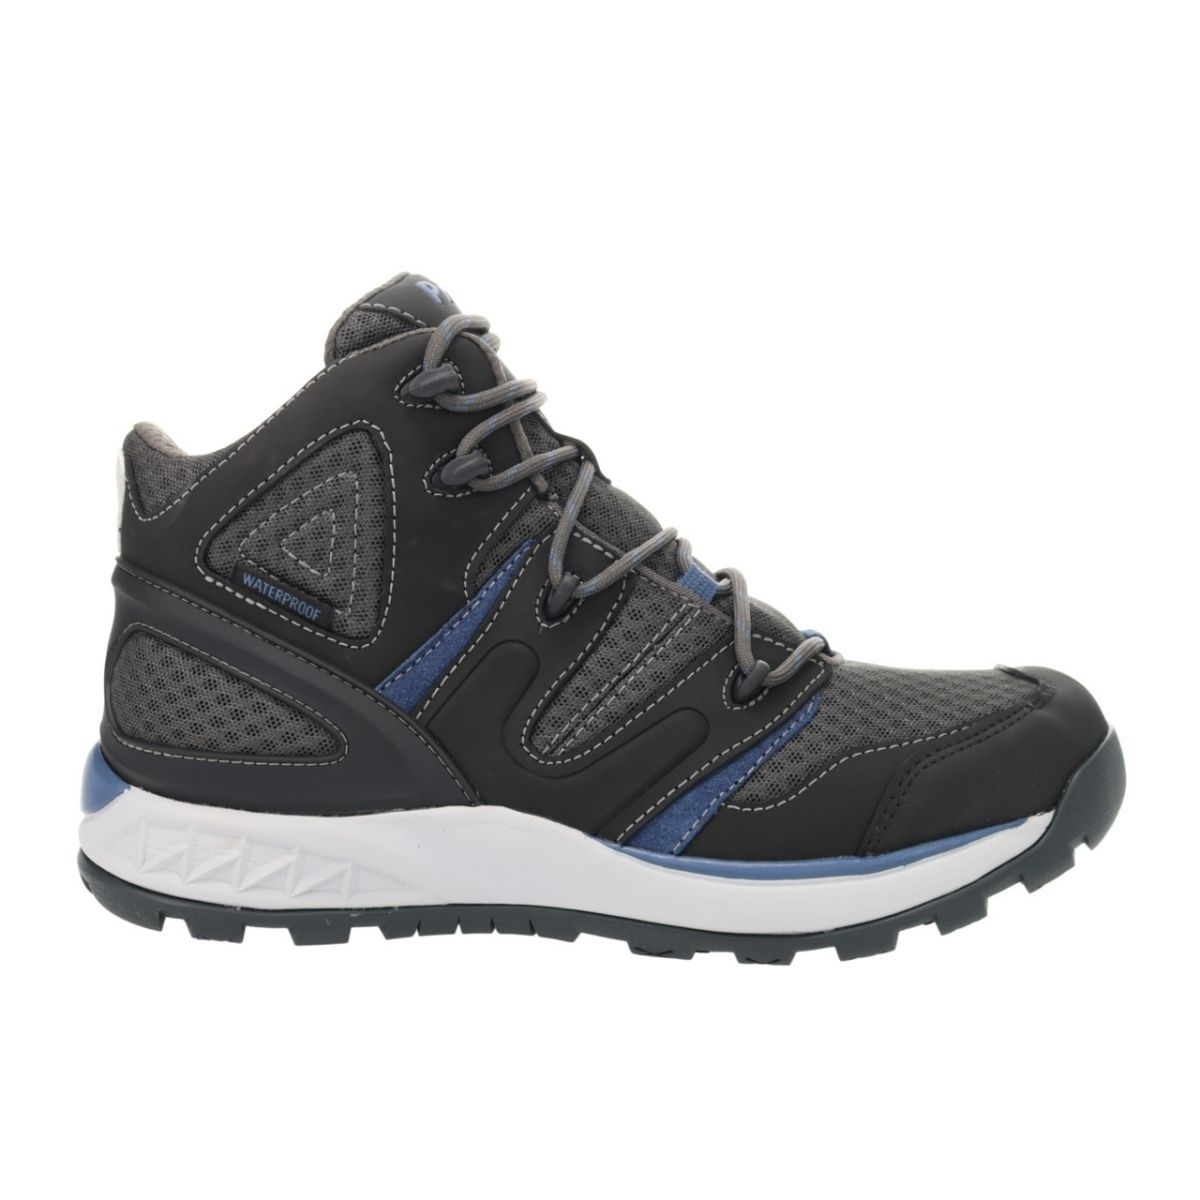 Propet Men's Veymont Waterproof Hiking Boot Grey/Blue - MOA022SGRB GREY/BLUE - GREY/BLUE, 8 XX-Wide